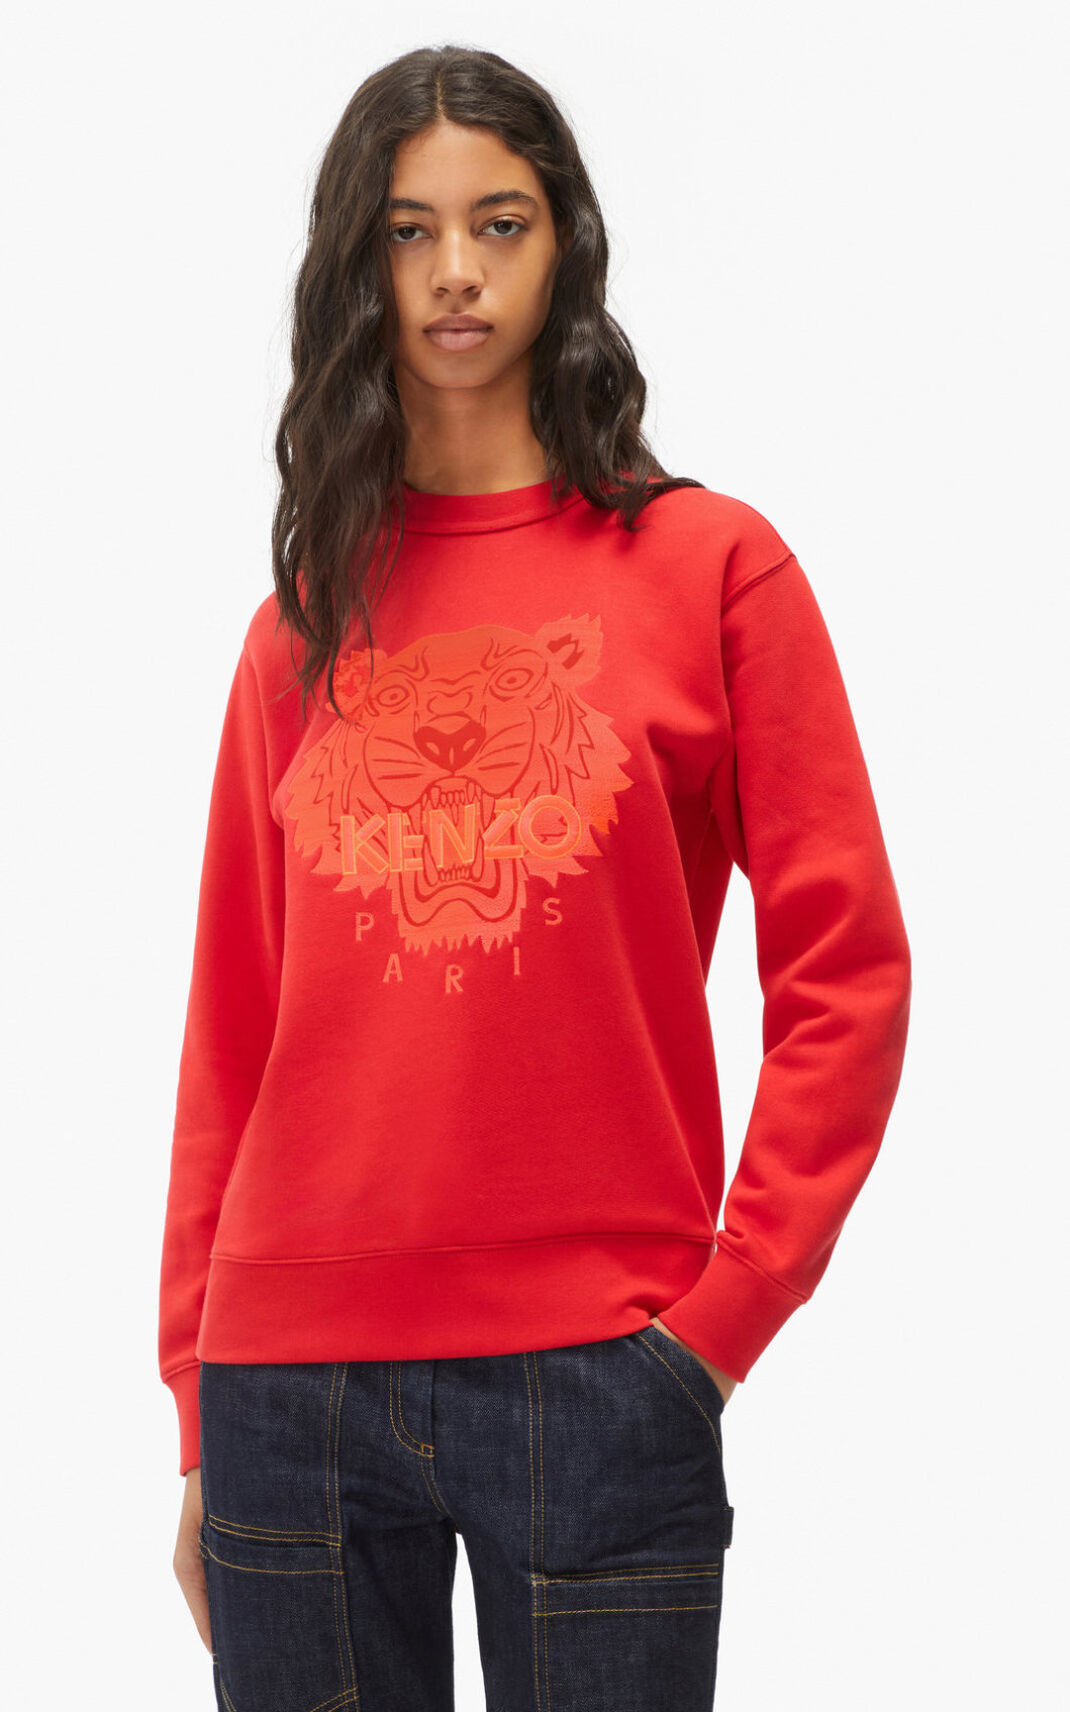 Kenzo Tiger Sweatshirt Dame - Rød DK-024790